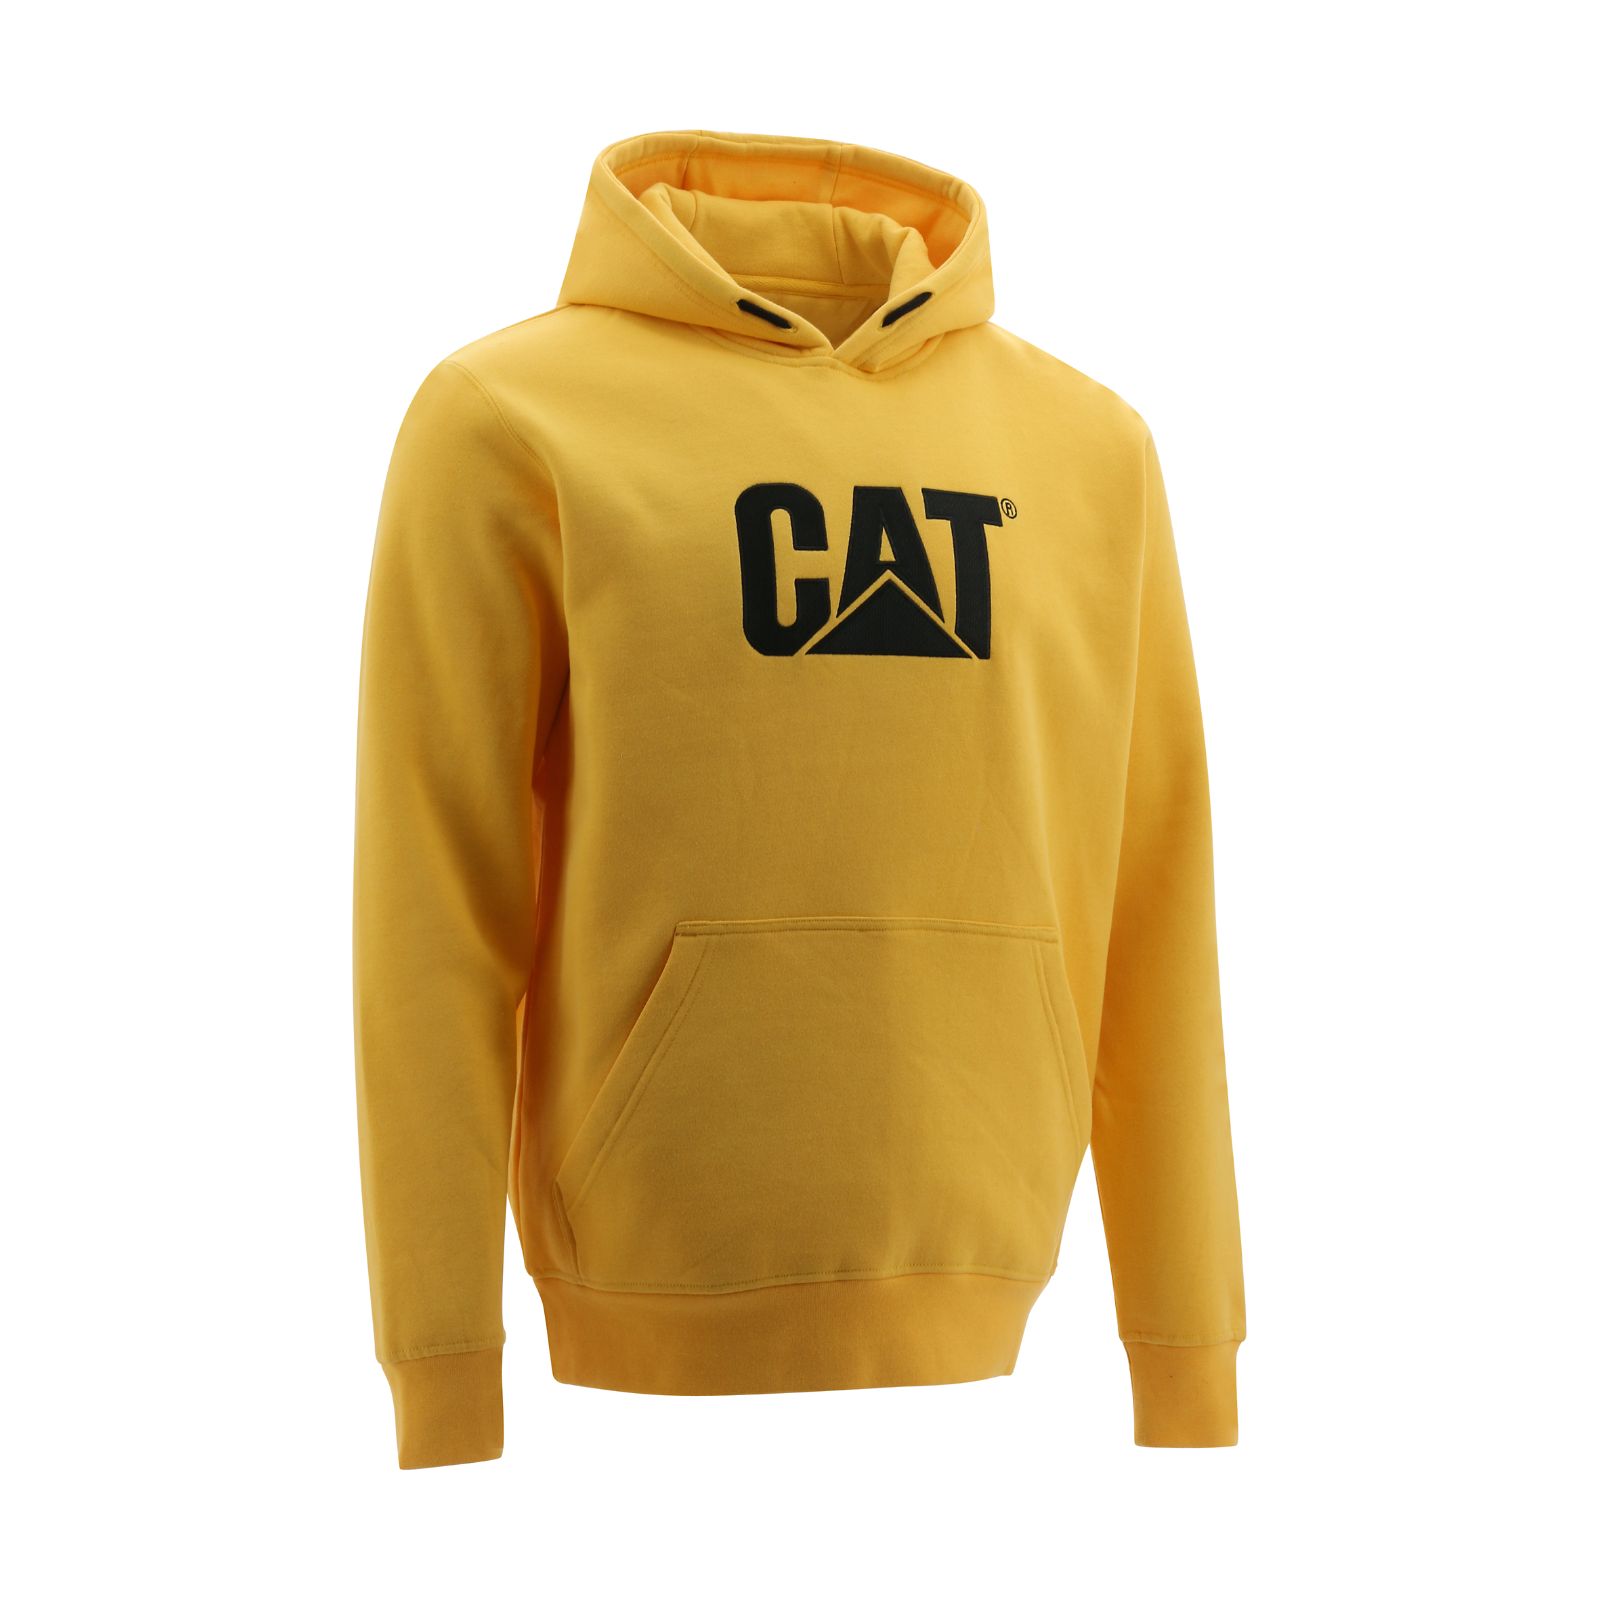 Caterpillar Clothing Pakistan - Caterpillar Trademark Hooded Mens Sweatshirts Yellow (260714-MCT)